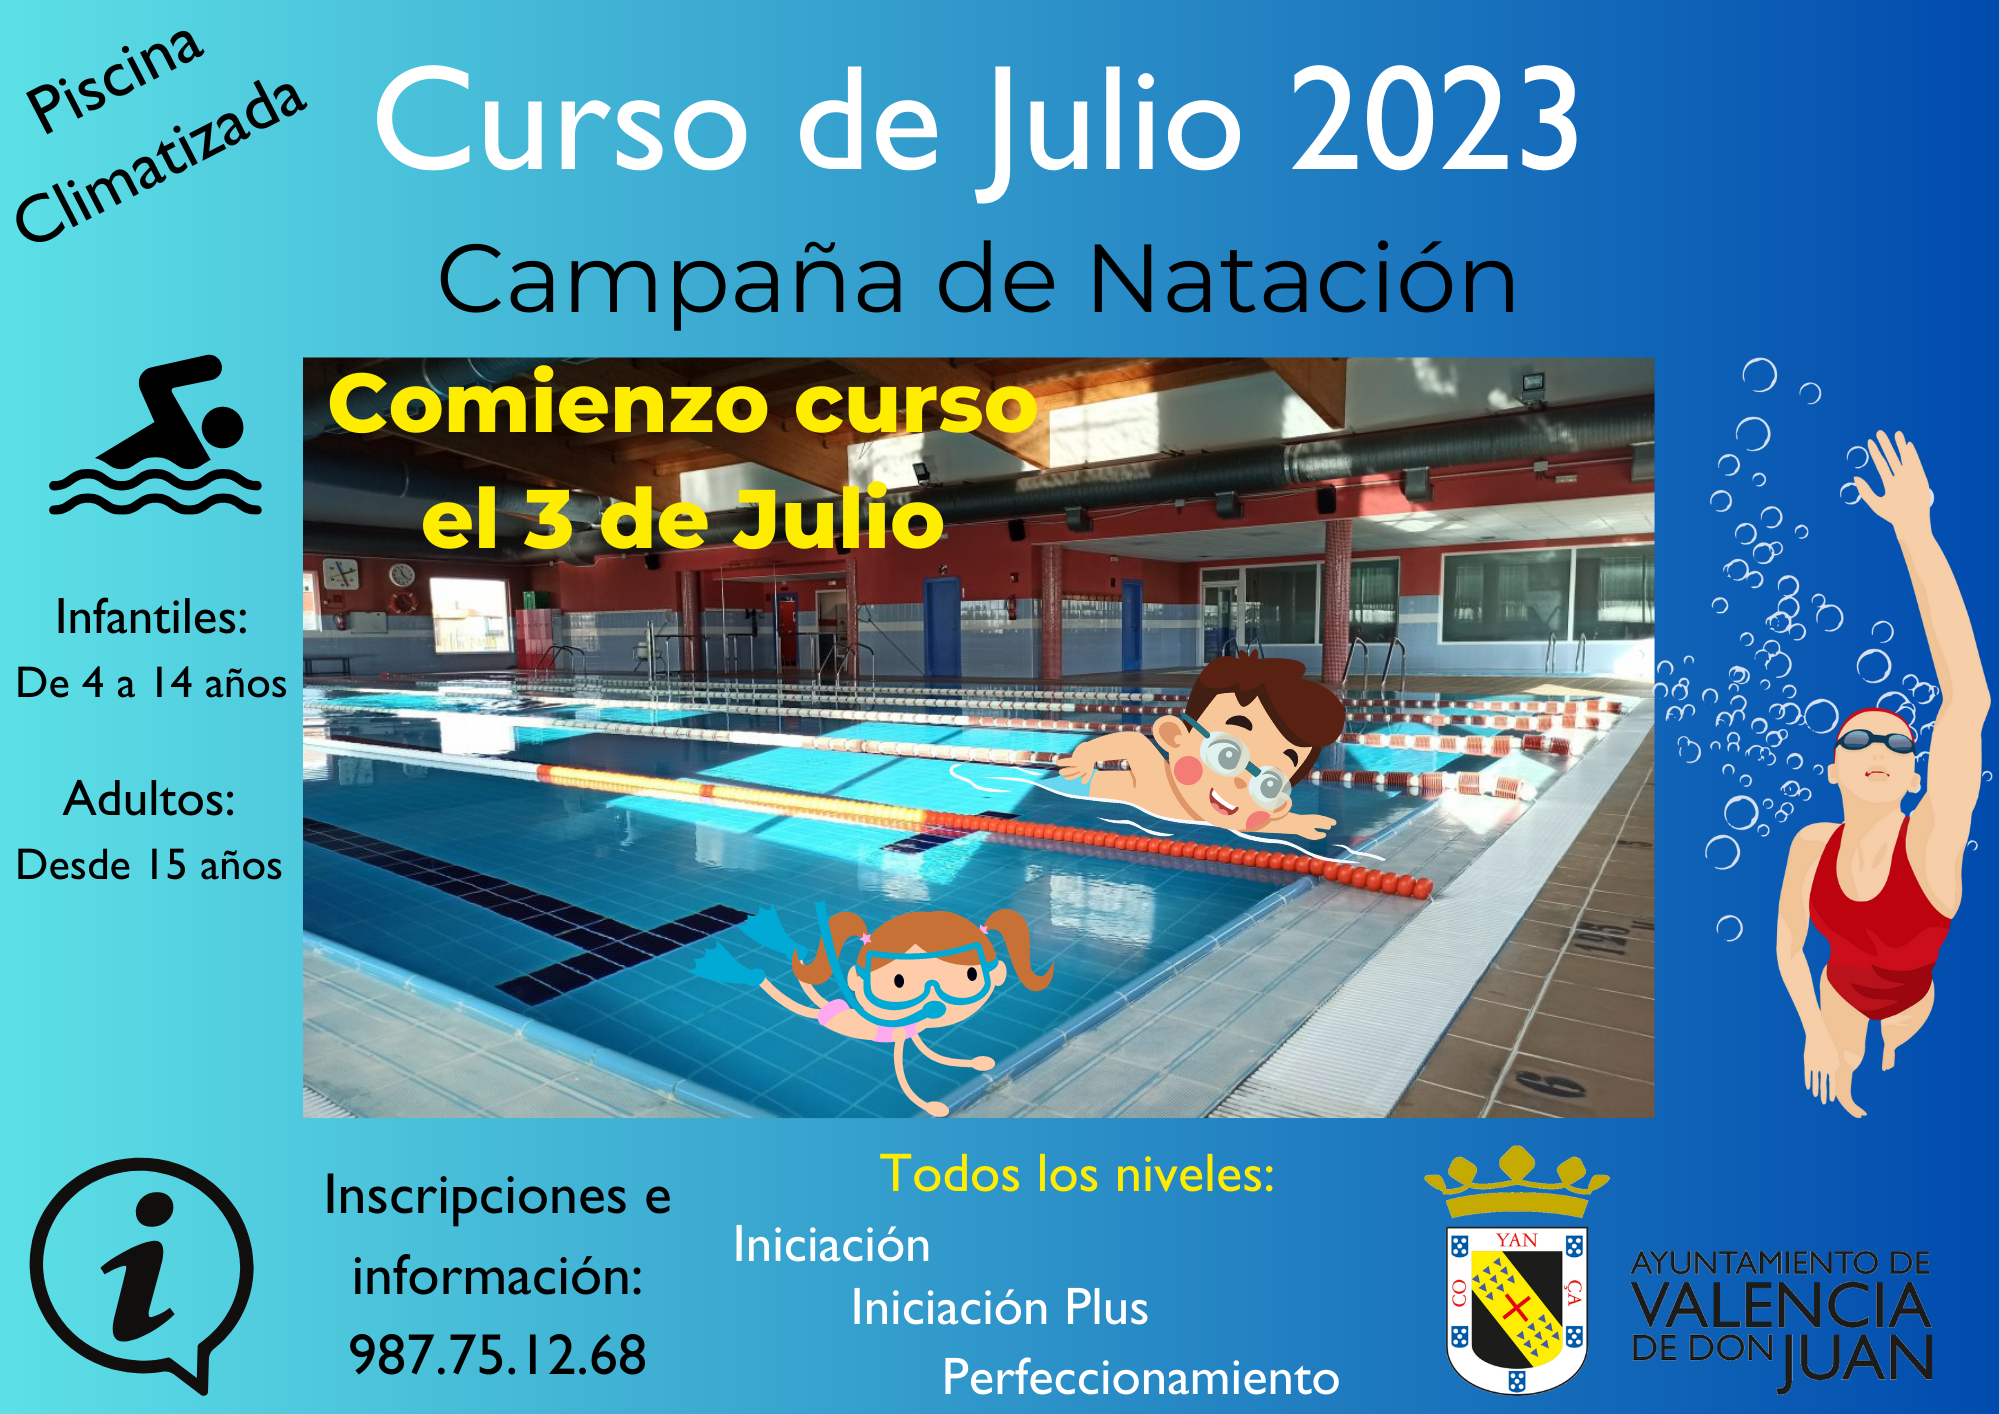 Campaña de Natación: Curso Julio 2023